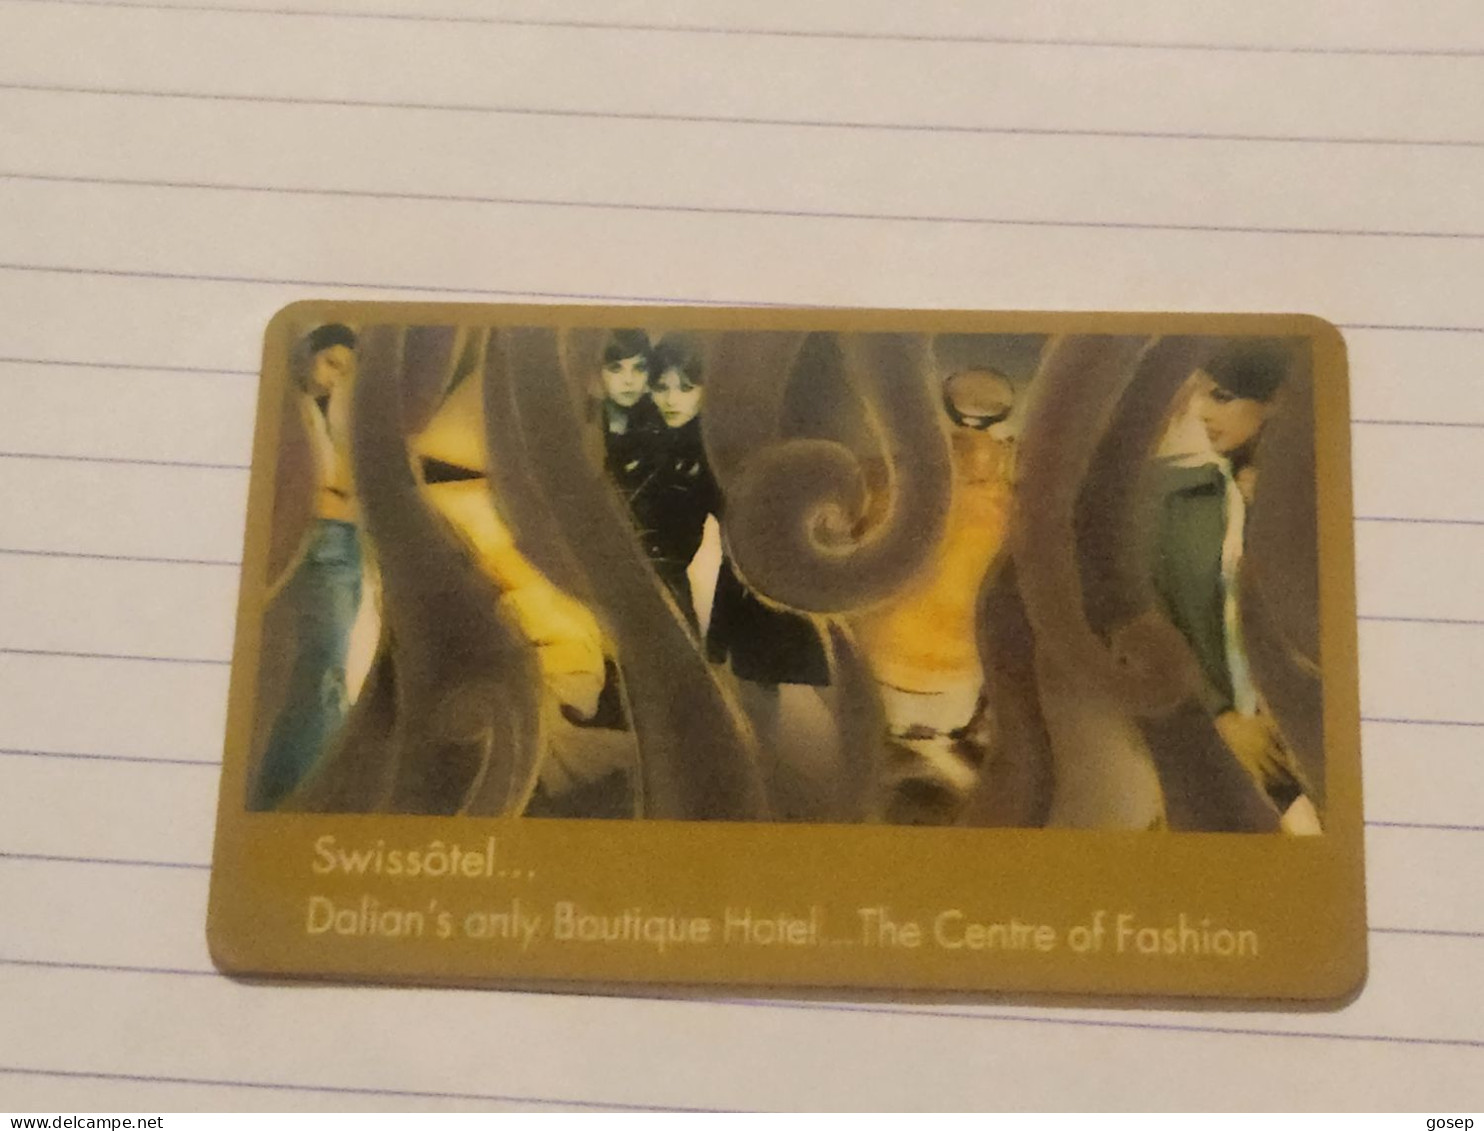 SWIZERLAND-SWISSOTEL DALIAN'S ONLY BQUTIQUE HOTAL- KEY CARD-(1063)(?)GOOD CARD - Hotelkarten